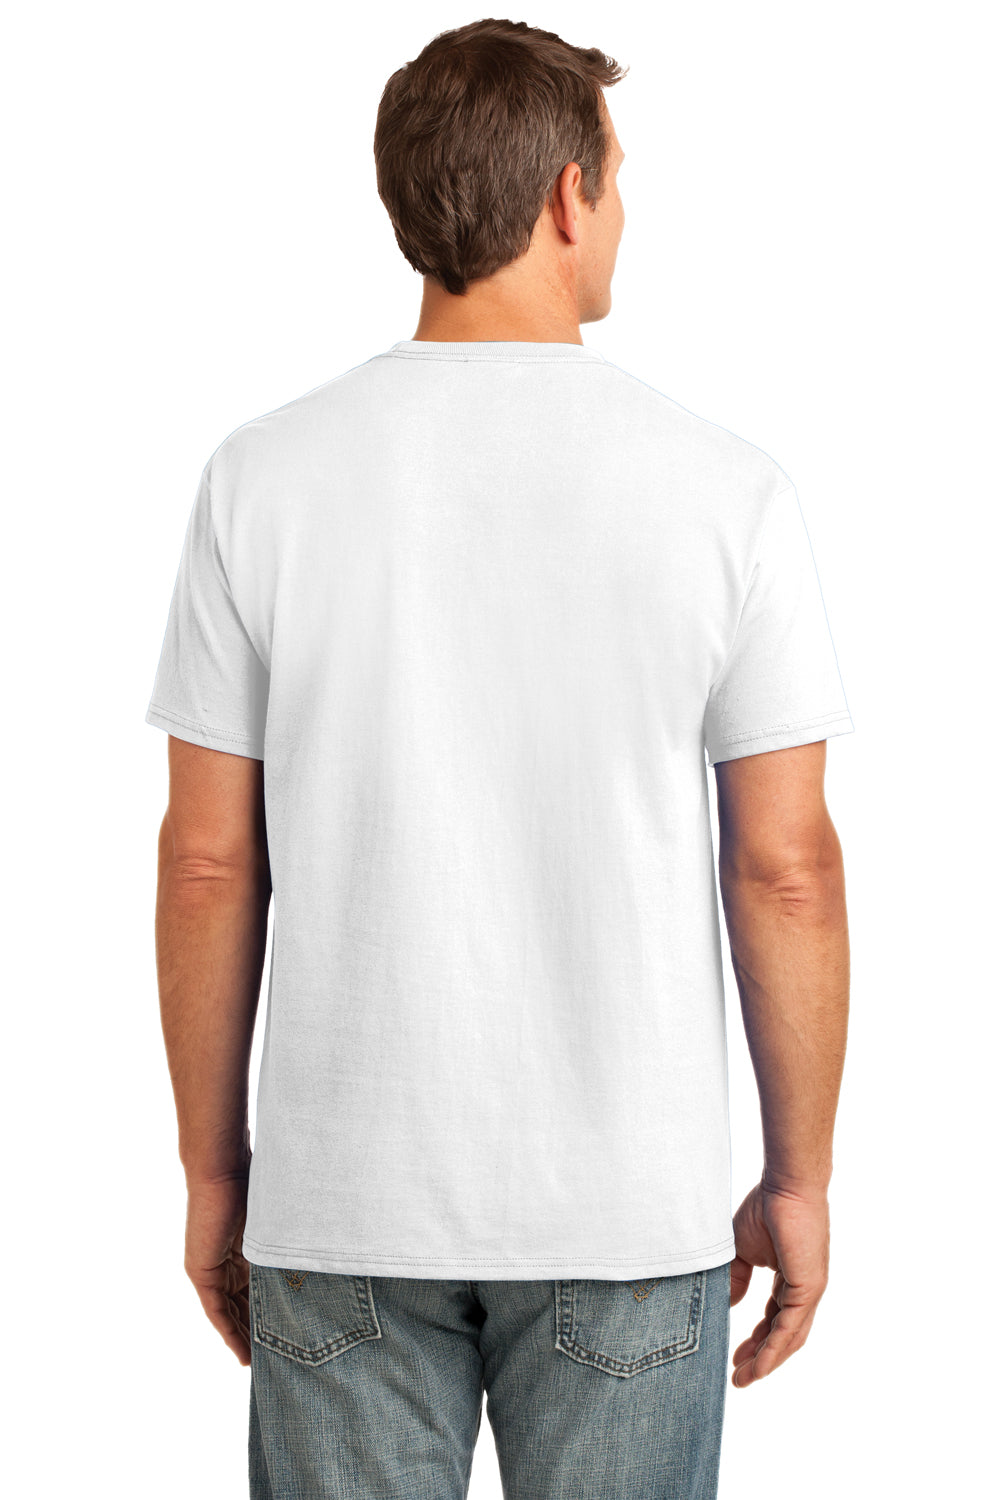 Port & Company PC54P Mens Core Short Sleeve Crewneck T-Shirt w/ Pocket White Back